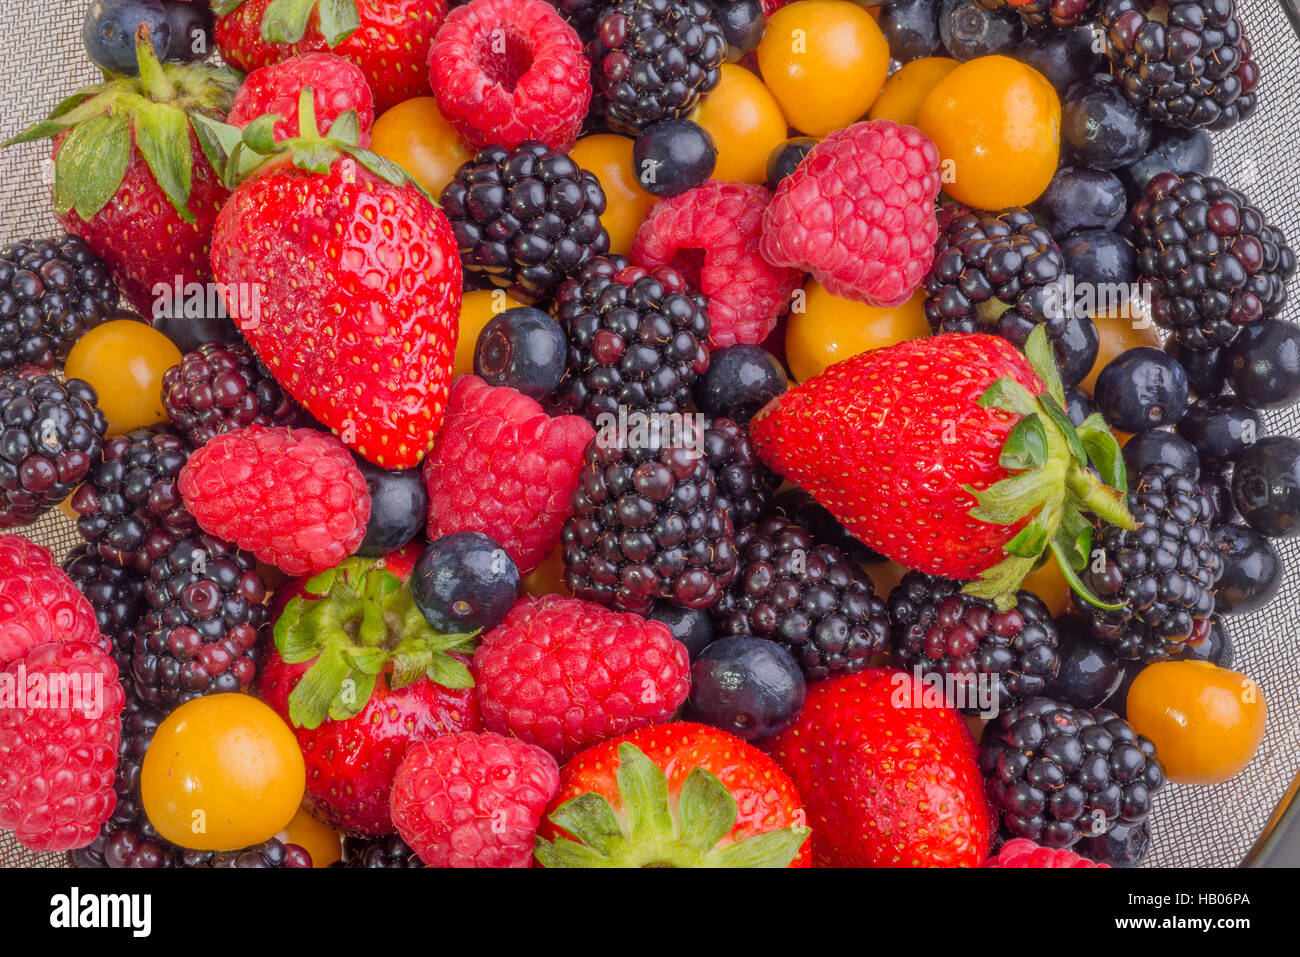 Mixed Berries Up Close Stock Photo